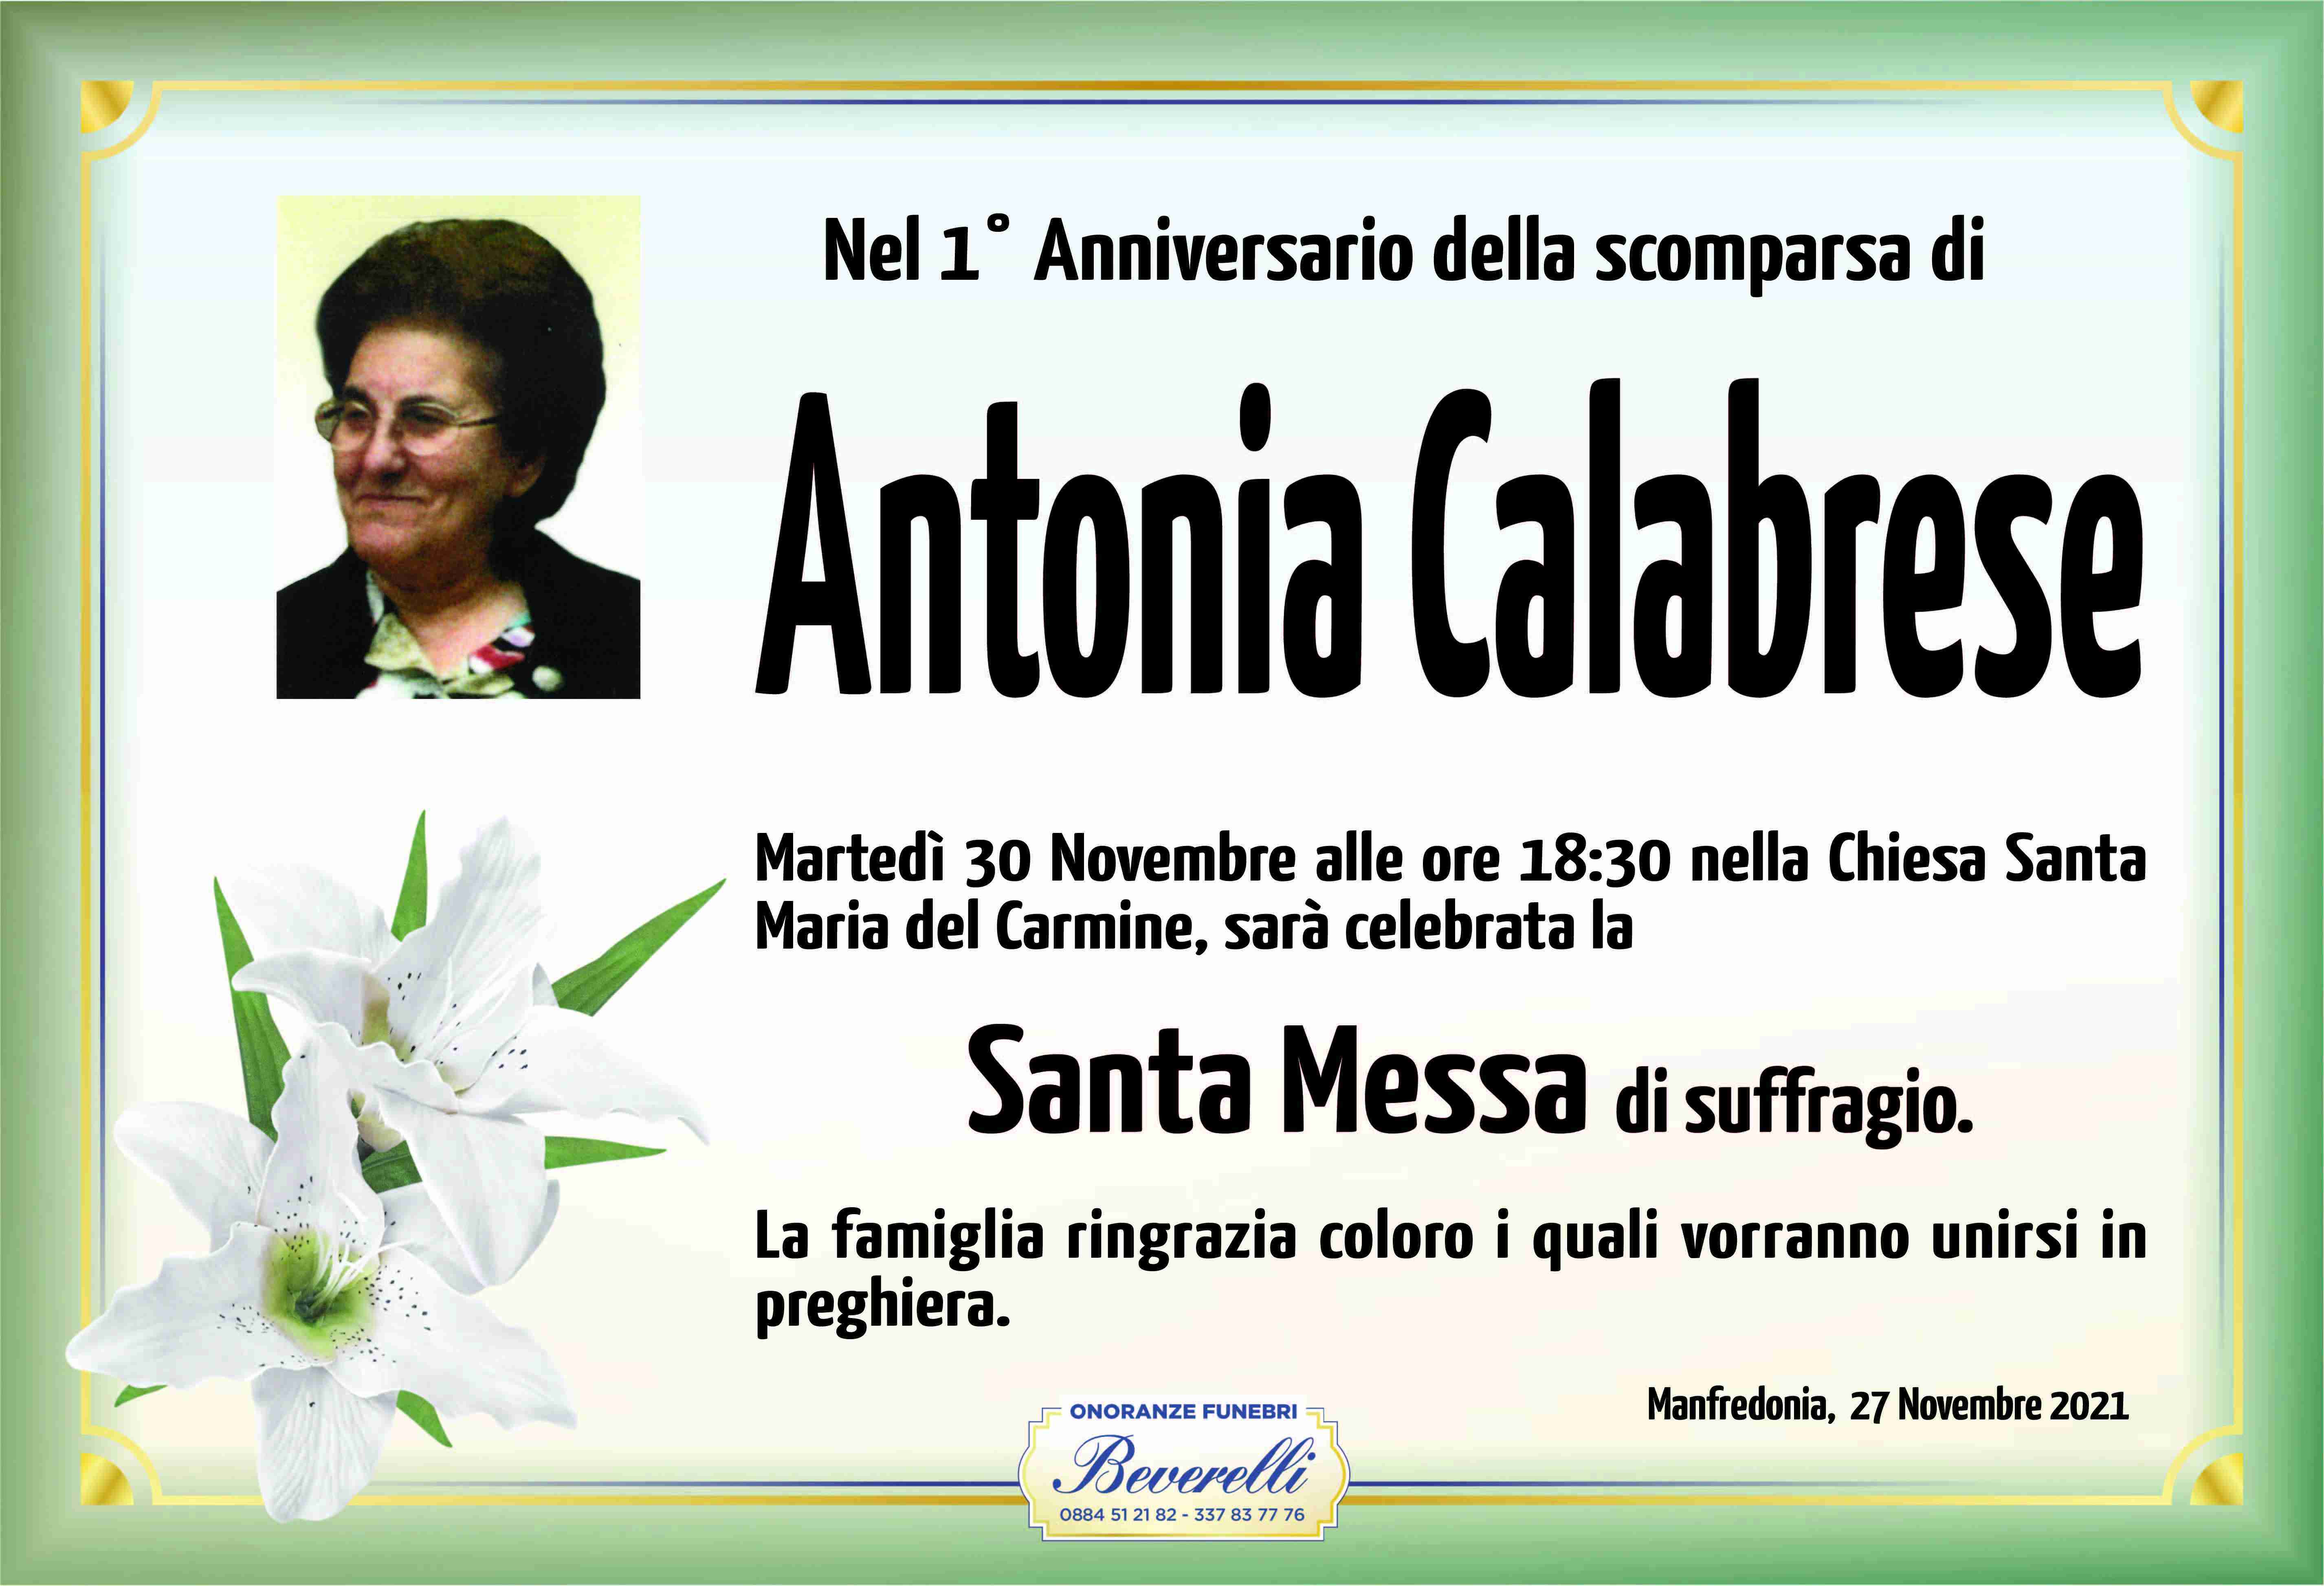 Antonia Calabrese